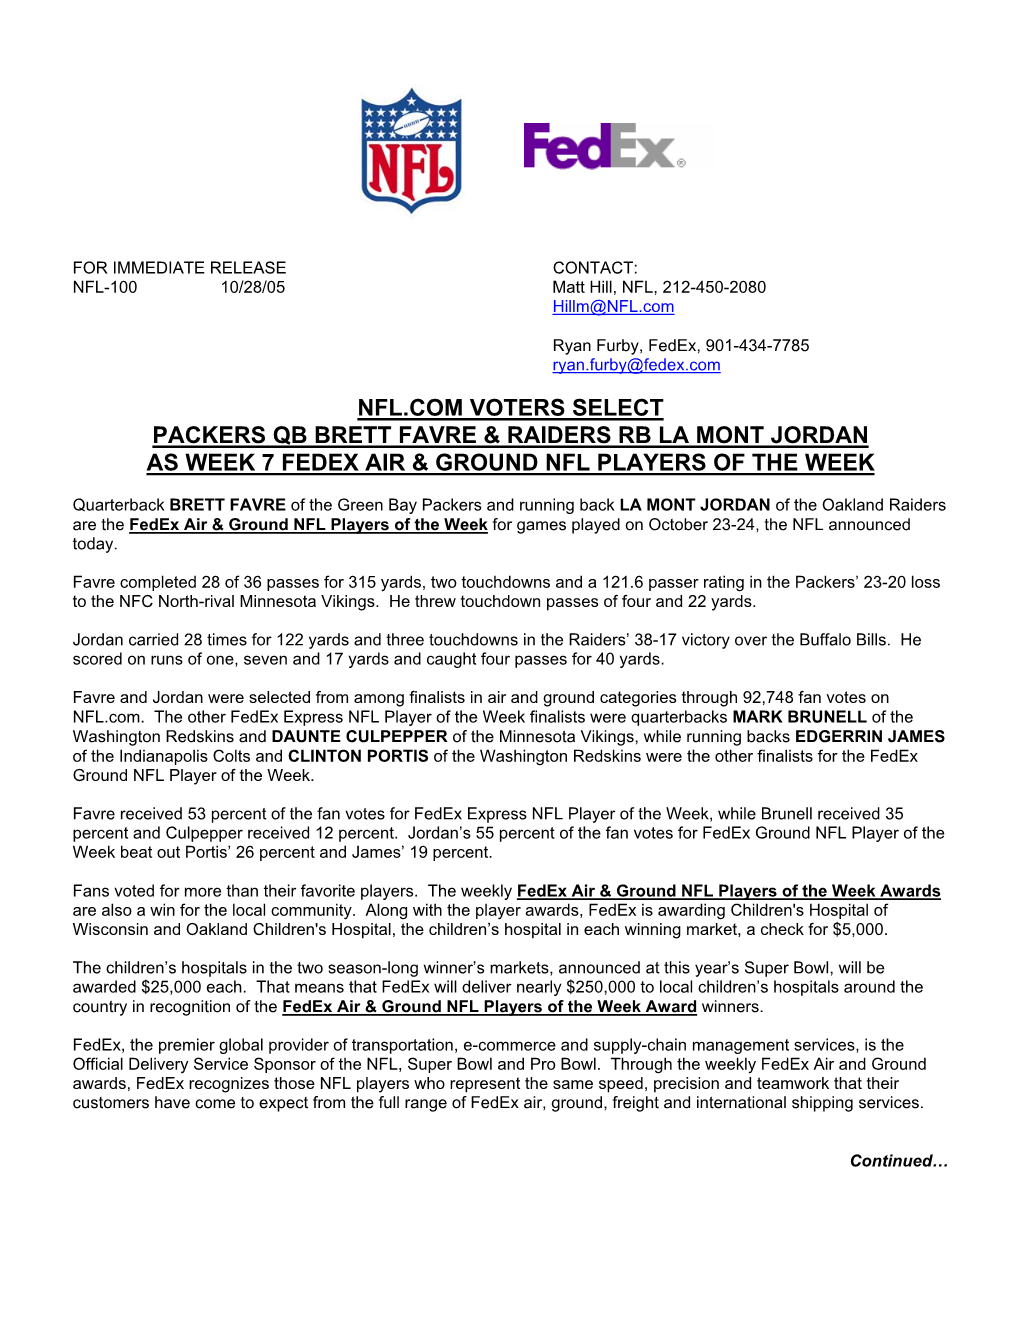 Nfl.Com Voters Select Packers Qb Brett Favre & Raiders Rb La Mont Jordan As Week 7 Fedex Air & Ground Nfl Players of the Week